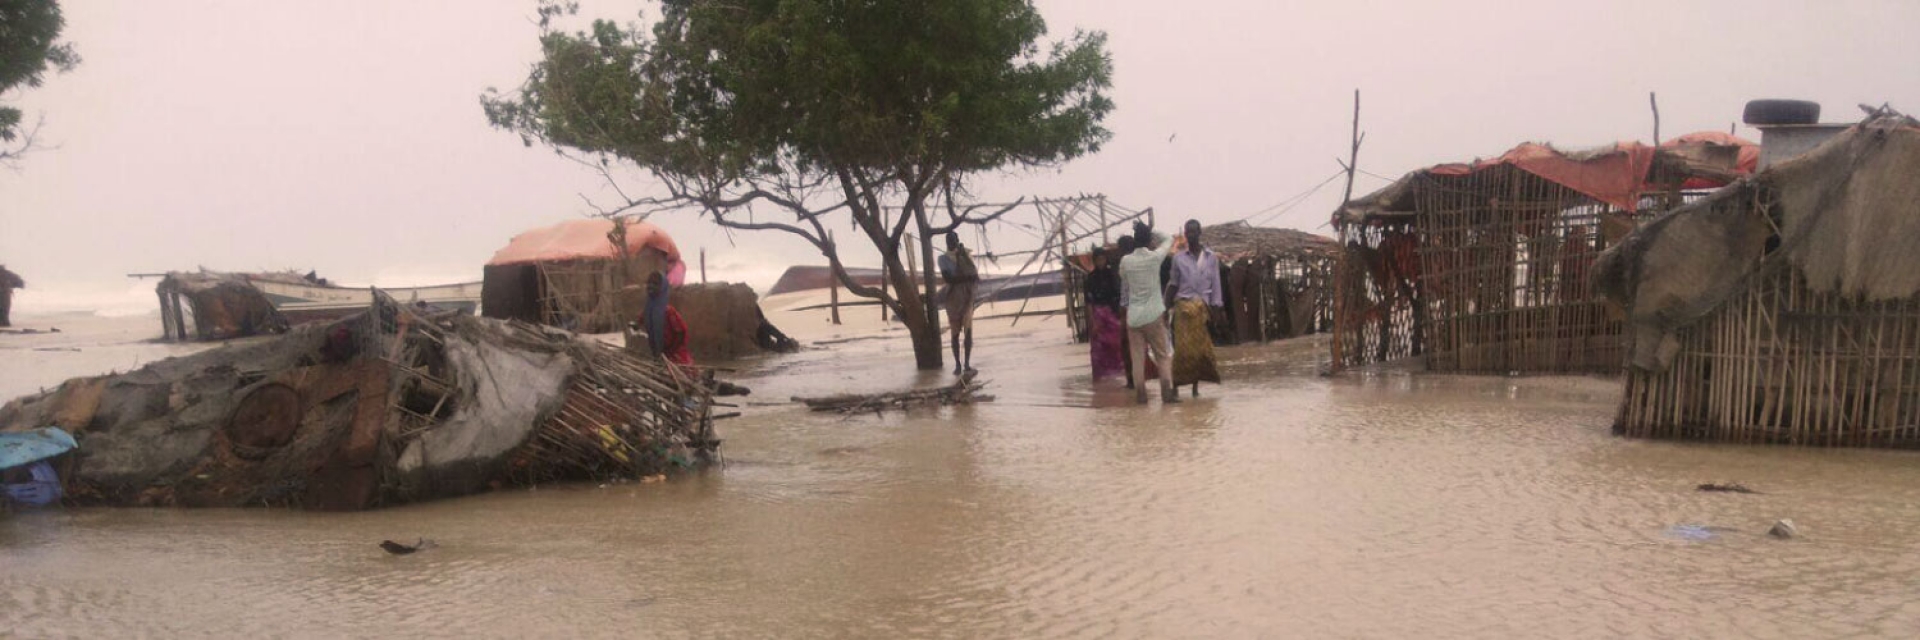 Somalia cyclone in 2015